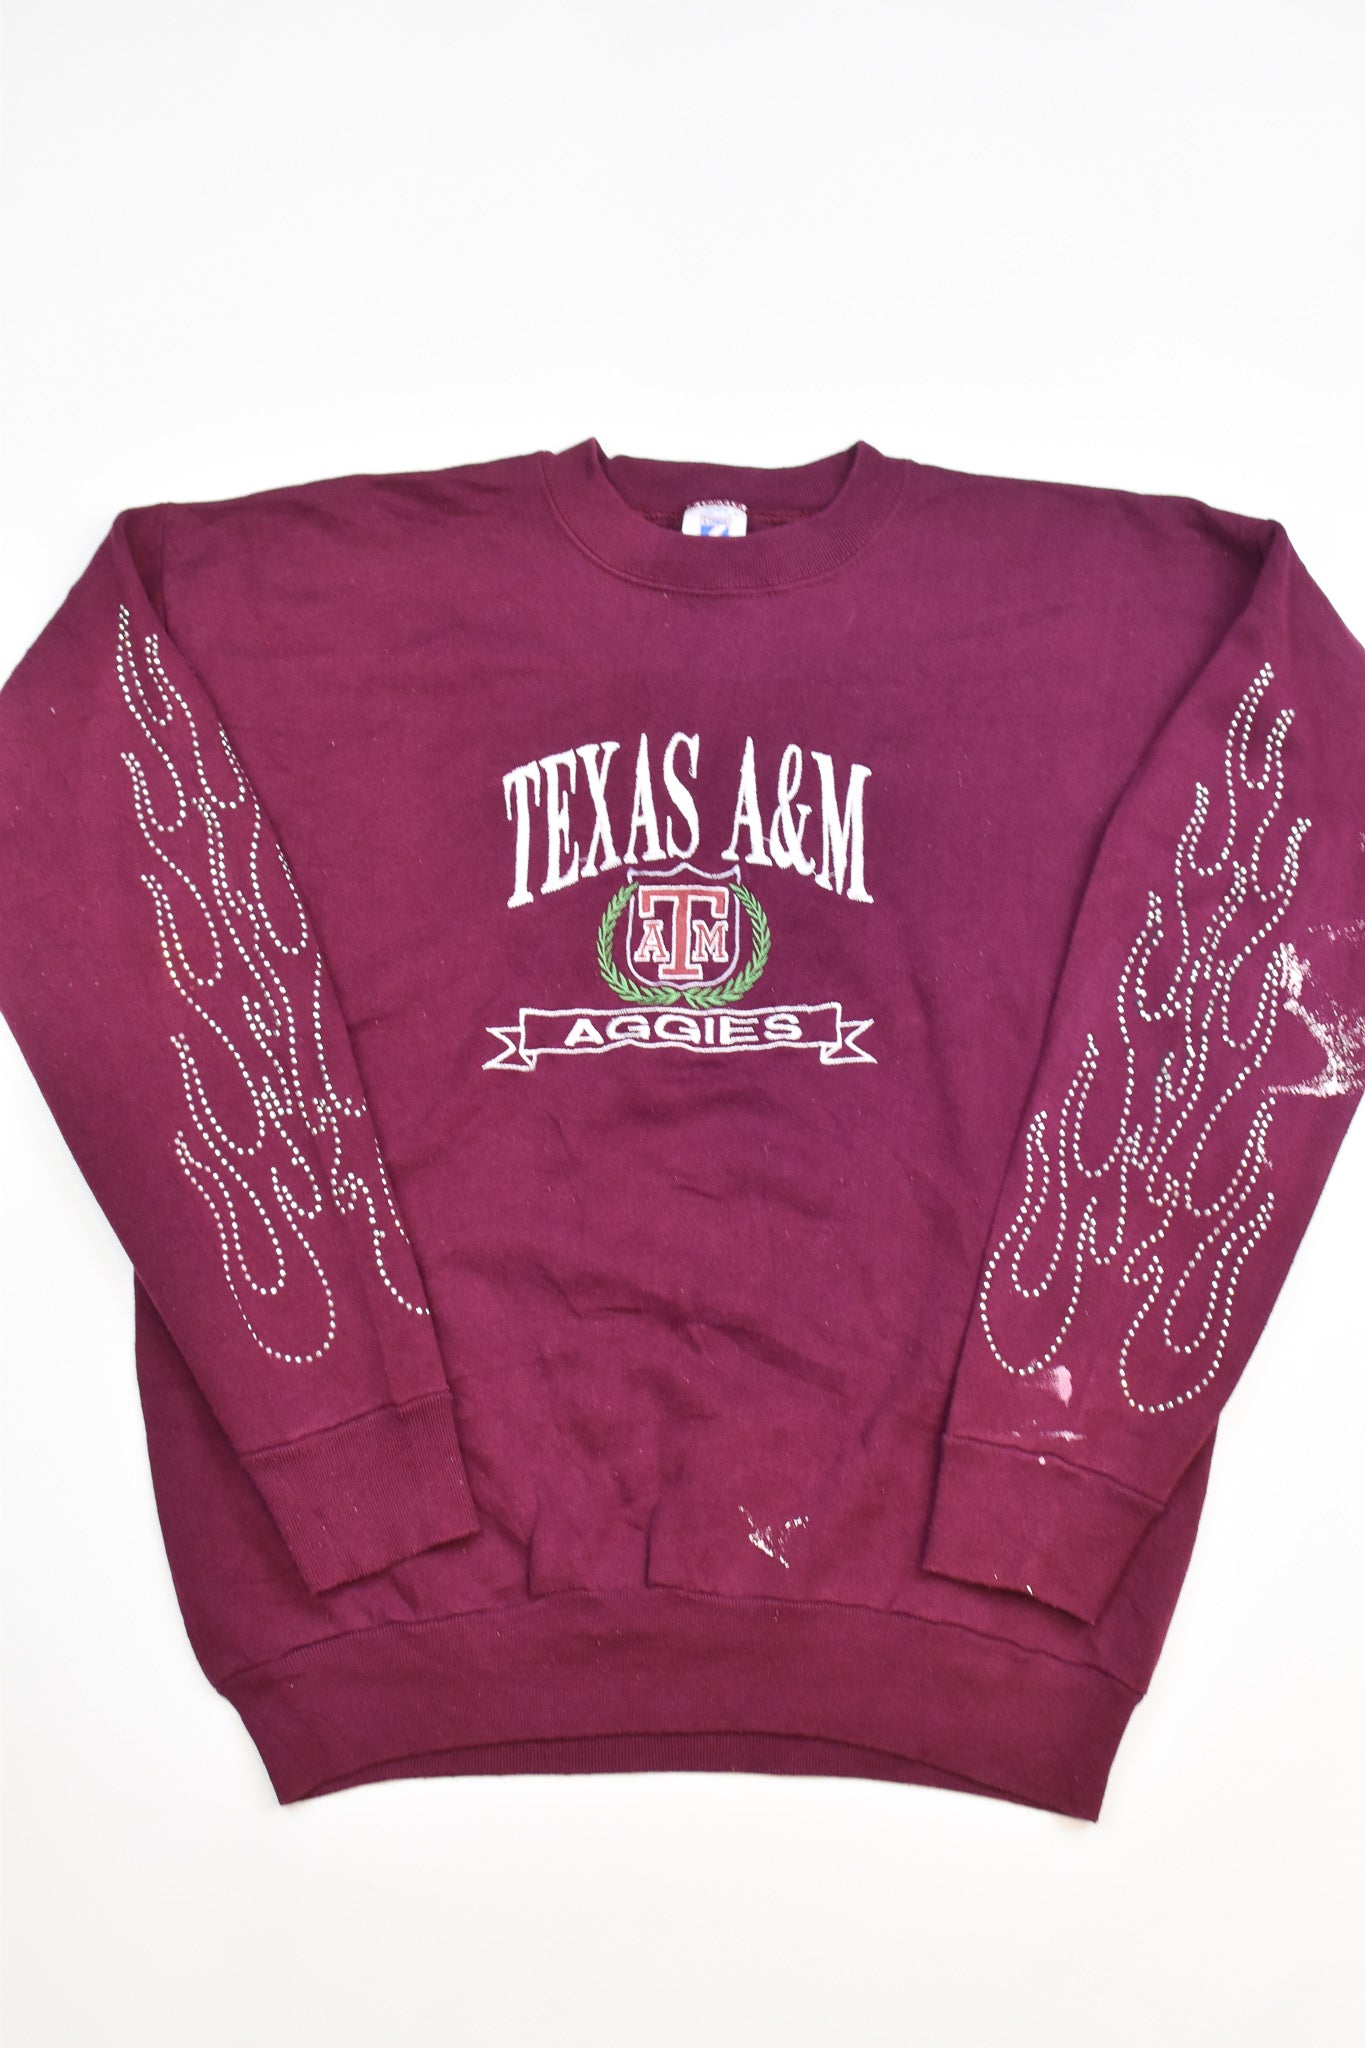 Upcycled Vintage Texas A&M Flame Sweatshirt